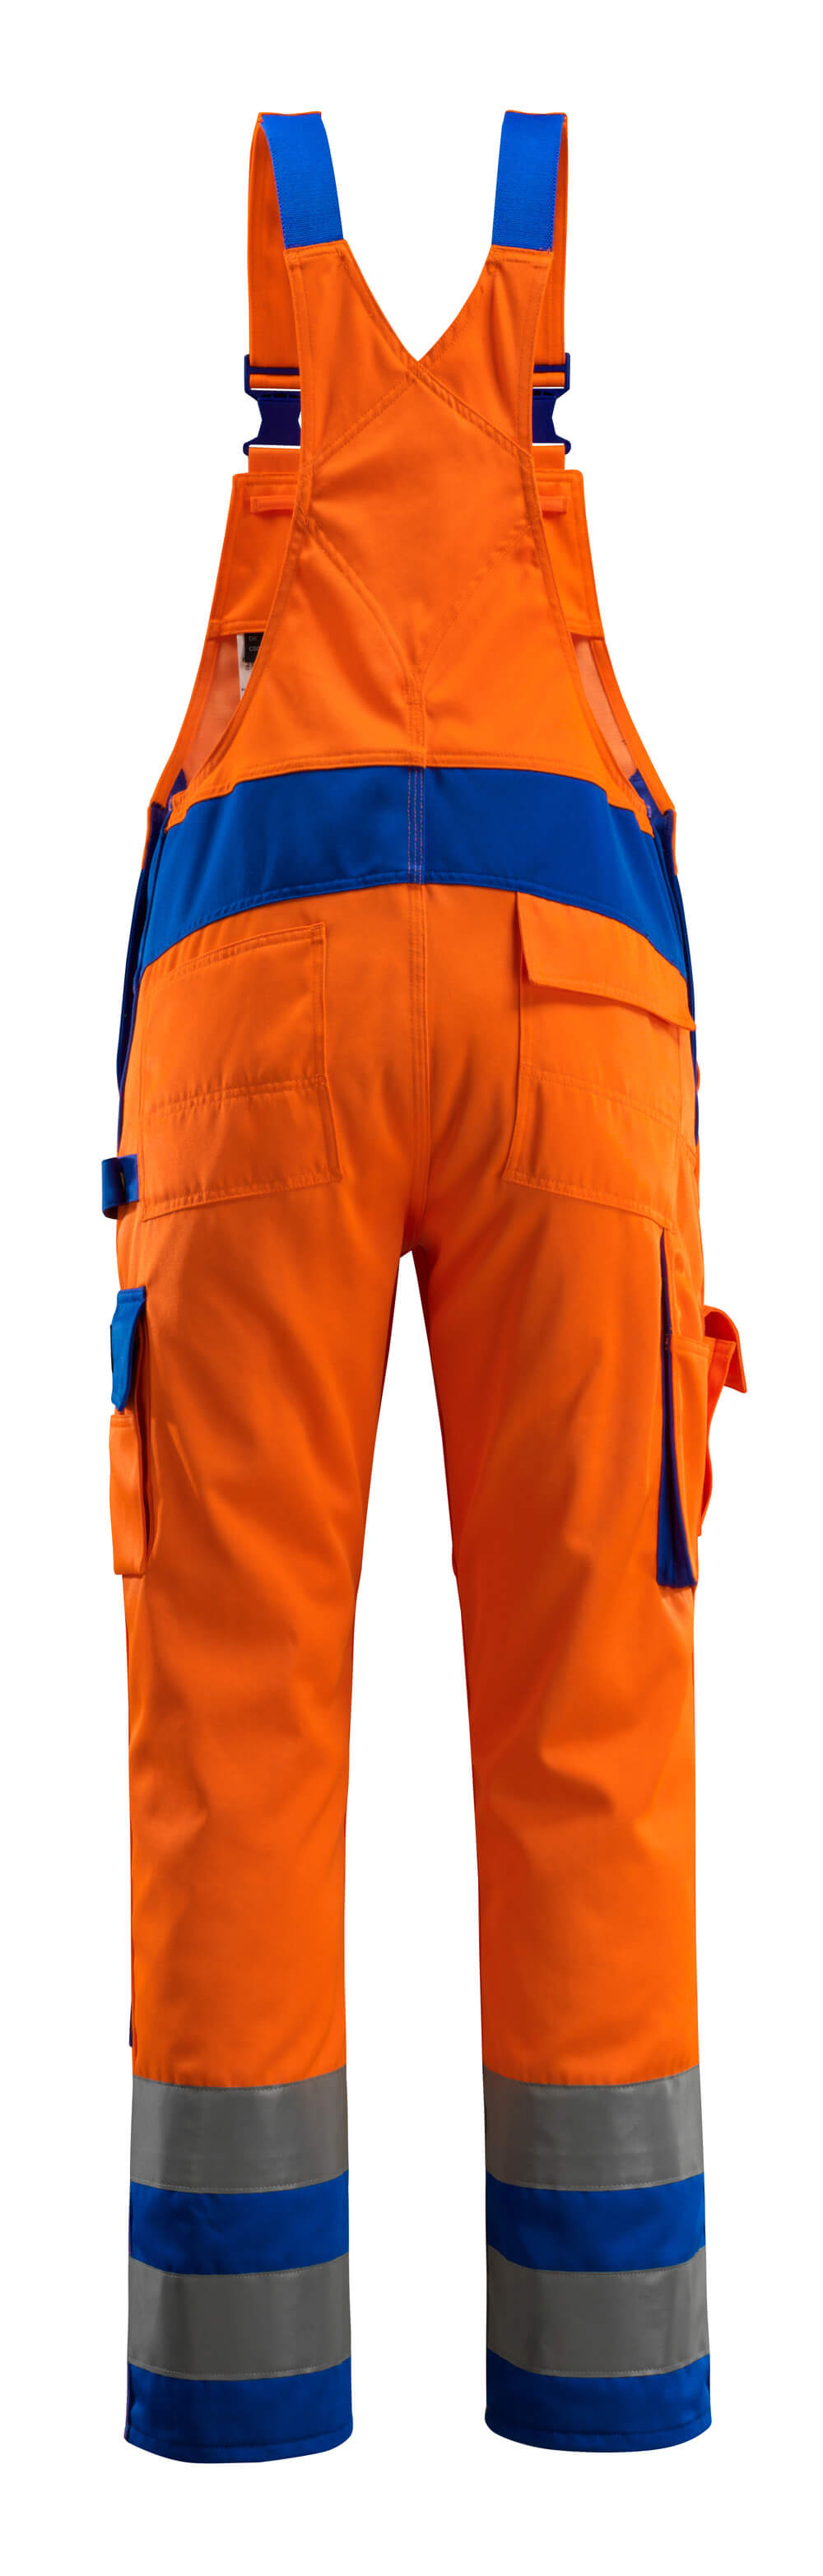 Mascot SAFE COMPETE  Barras Bib & Brace with kneepad pockets 07169 hi-vis orange/royal